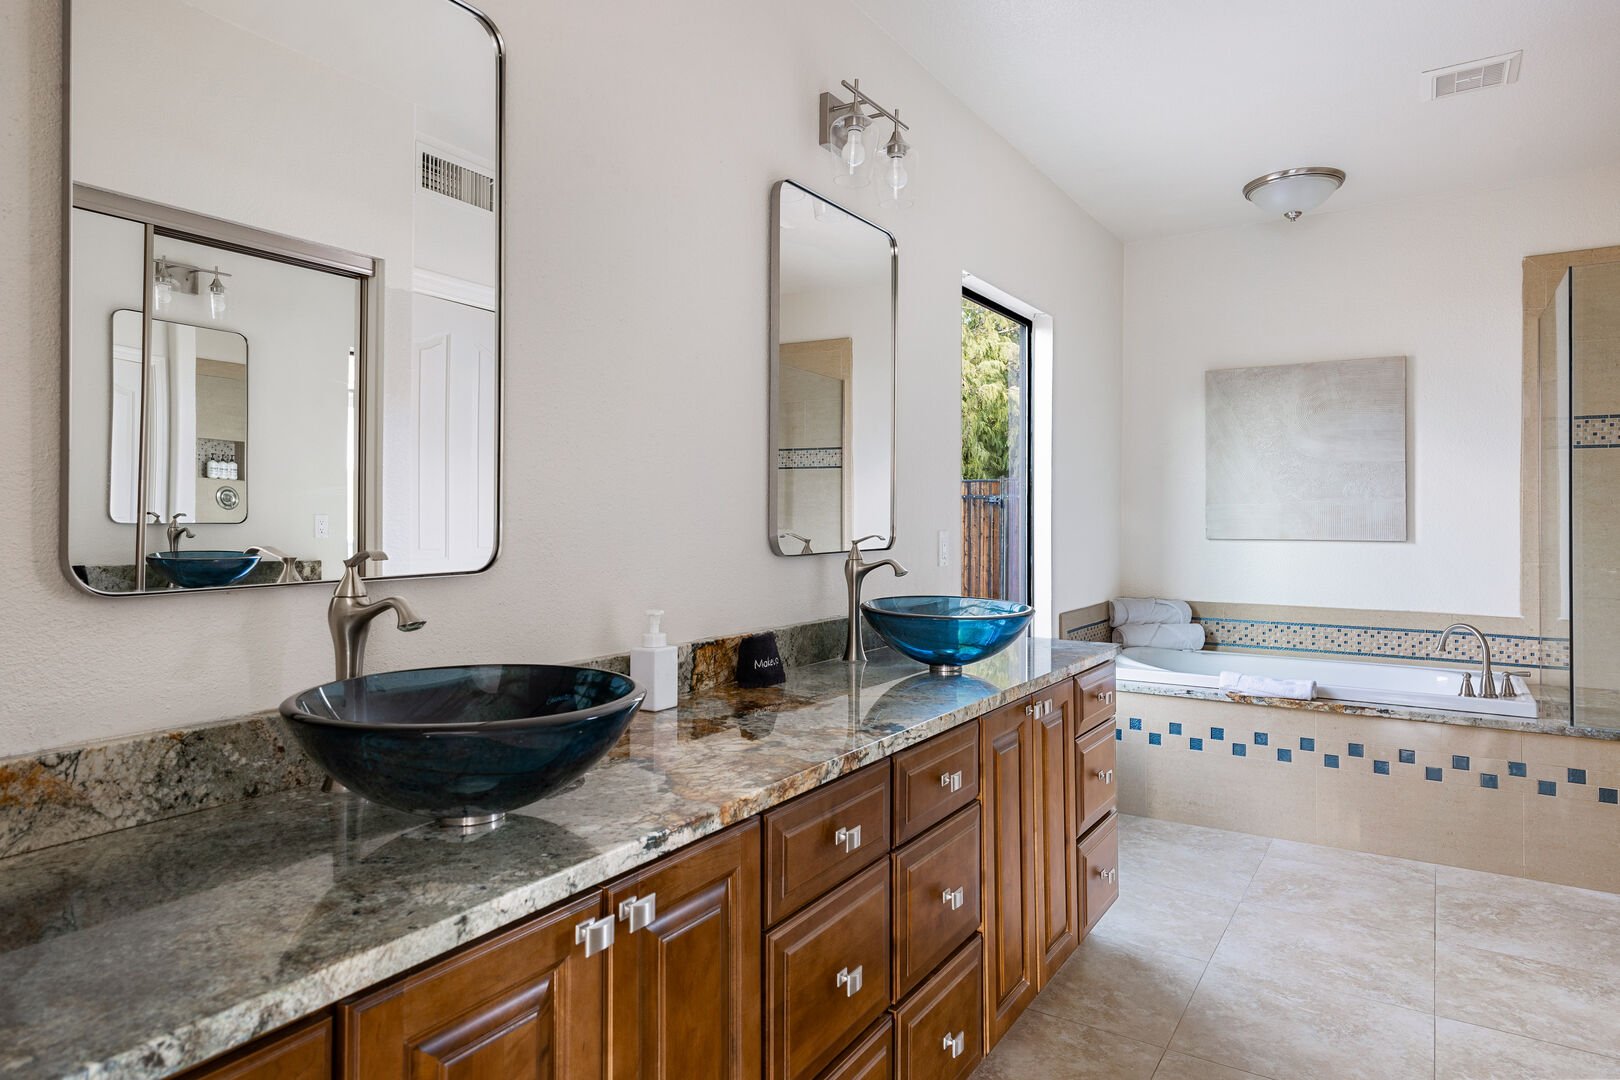 En-suite bathroom with double vanity sinks.